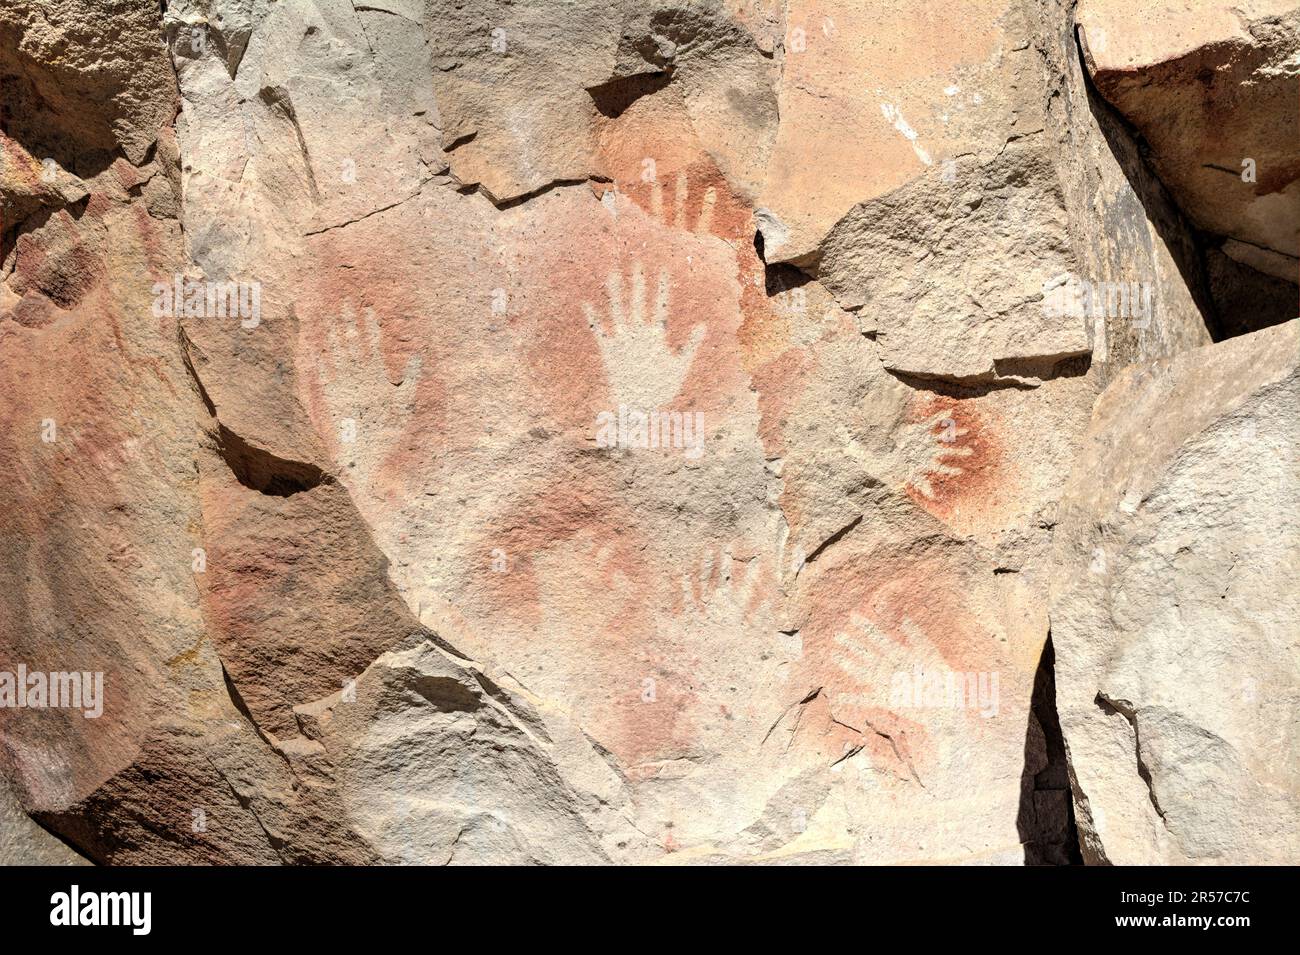 Prehistoric art - handprints in Cueva de las Manos cave and complex of rock art sites in Santa Cruz province, Argentina Stock Photo